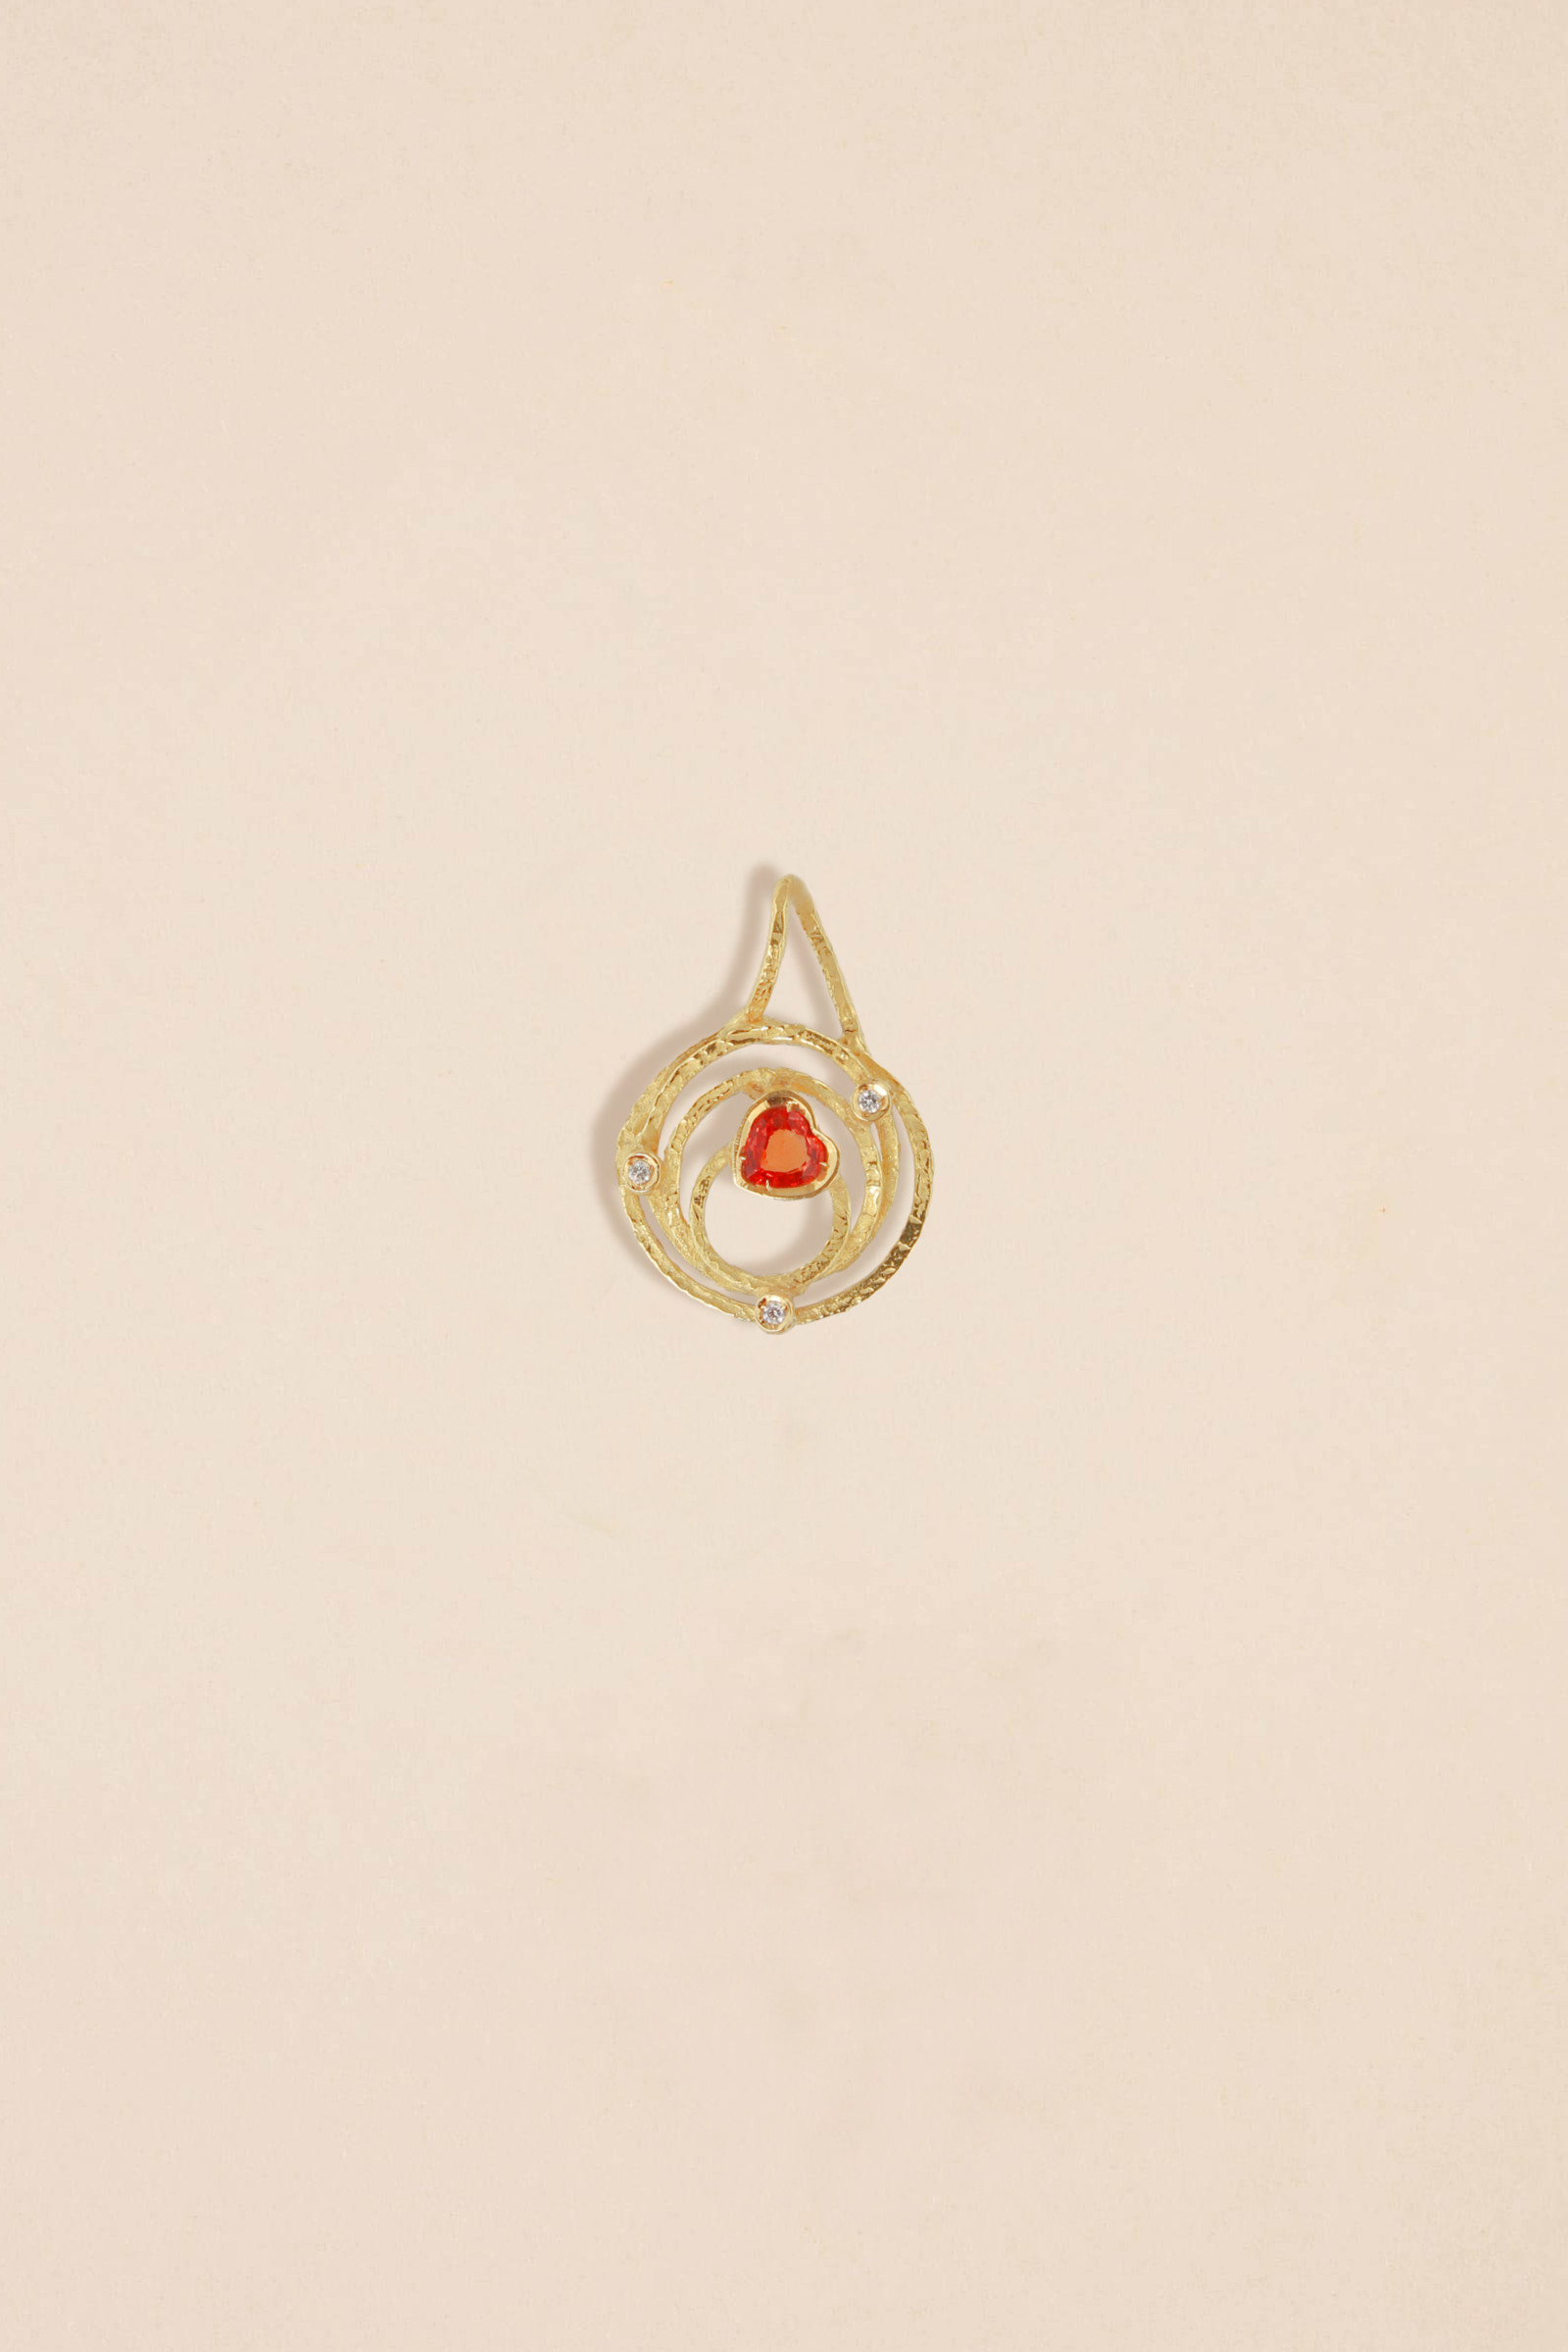 SH791BZA-18-Kt-Yellow-Gold-Orbit-Pendant-with-Diamonds-and-Heart-Sapphire-1